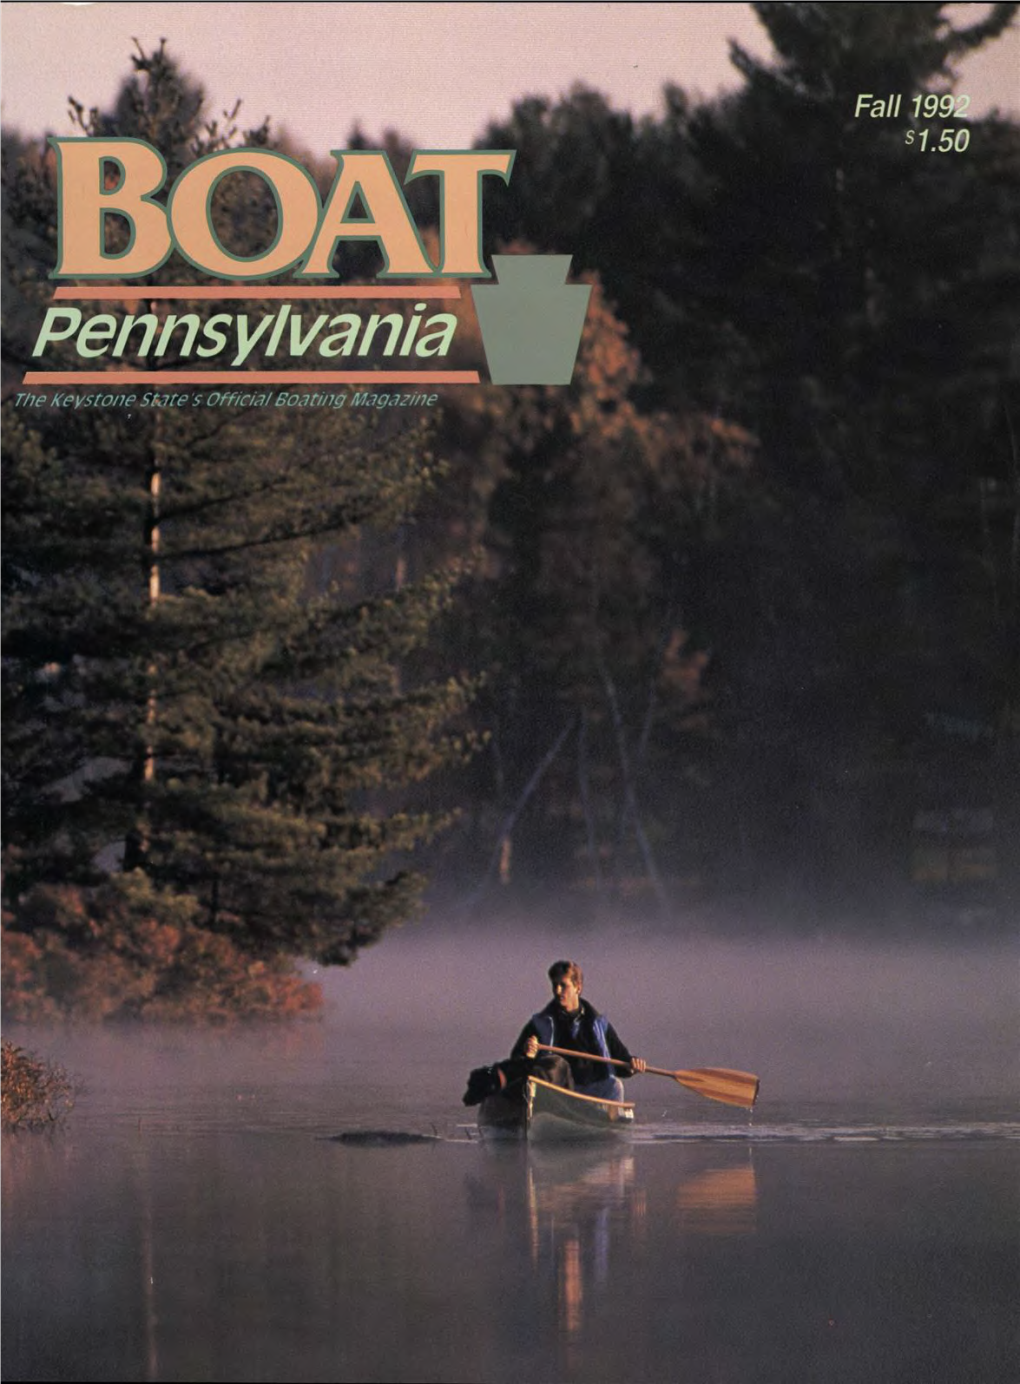 Fall 1992 Vol9 No.4 Pennsylvania Fish & Boat Commission J